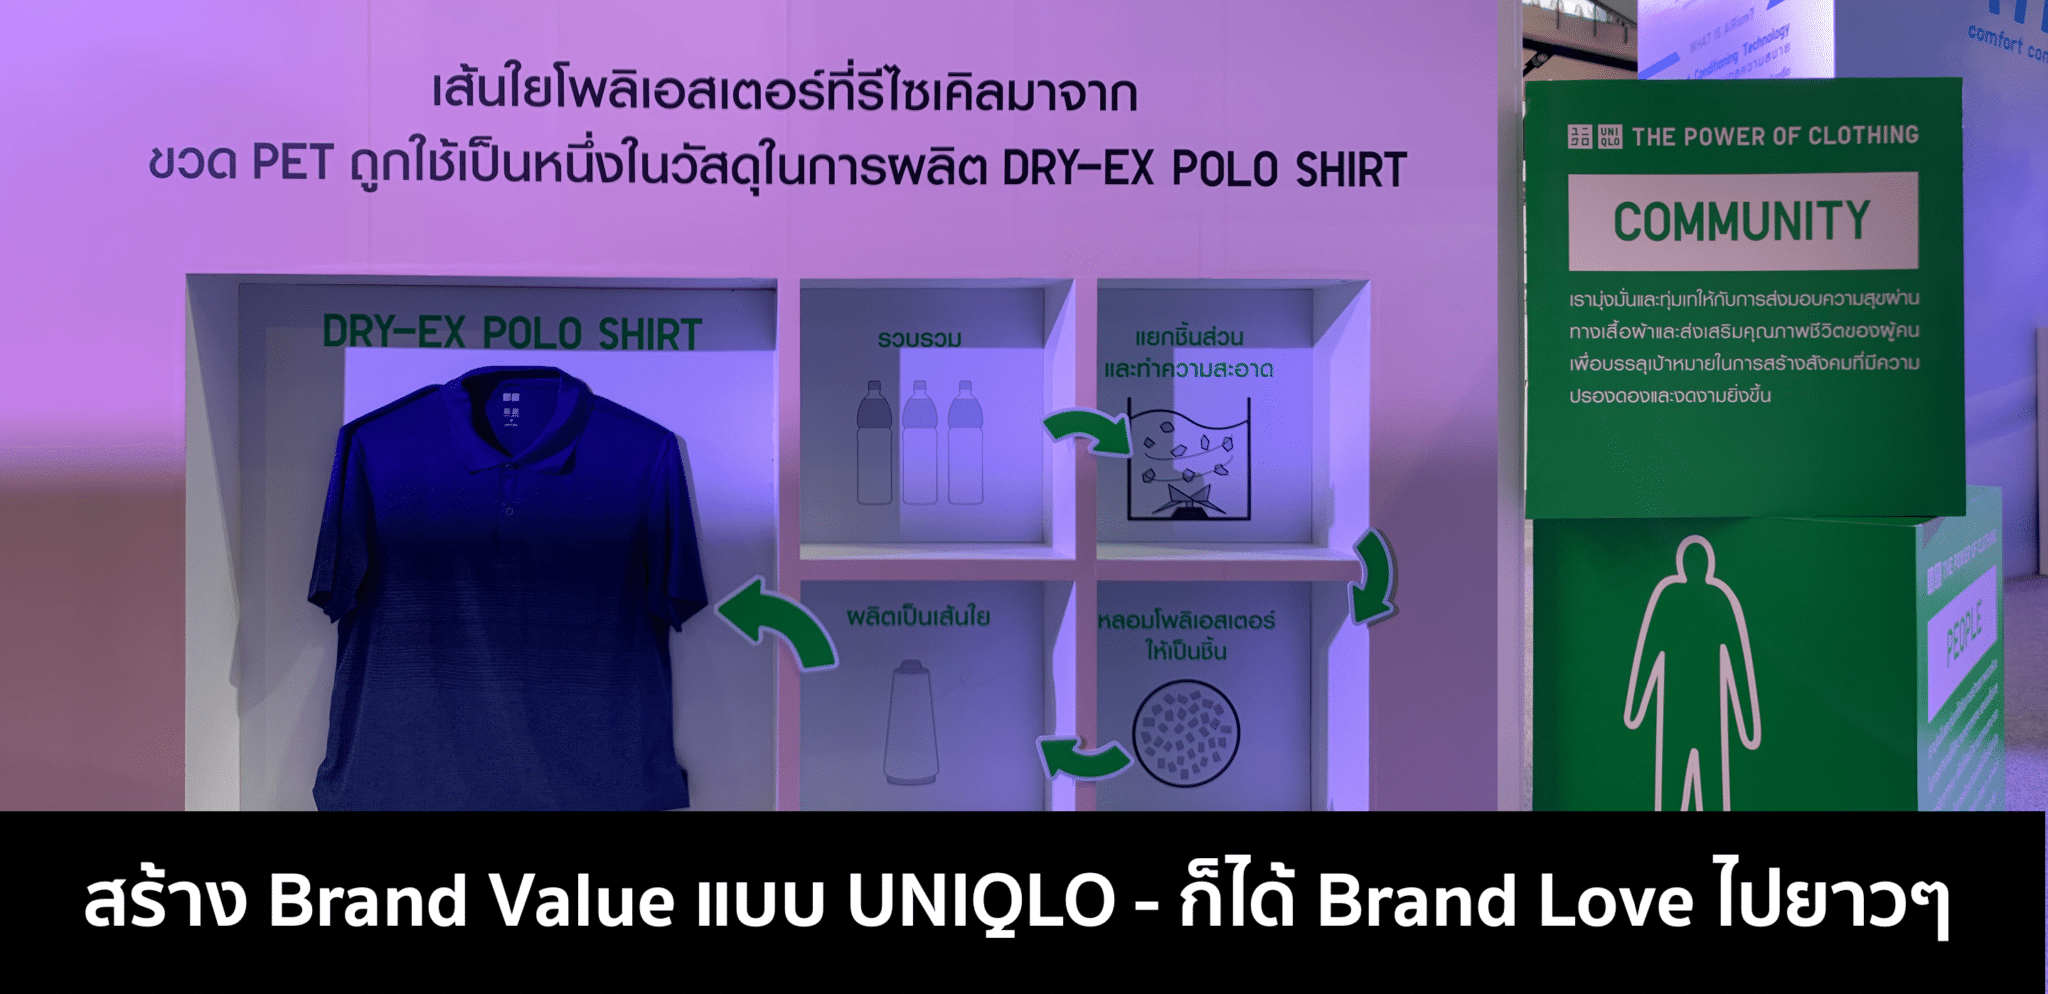 Brand Value แบบ Uniqlo ทำคนรักแบรนด์มากกว่าแค่สินค้า